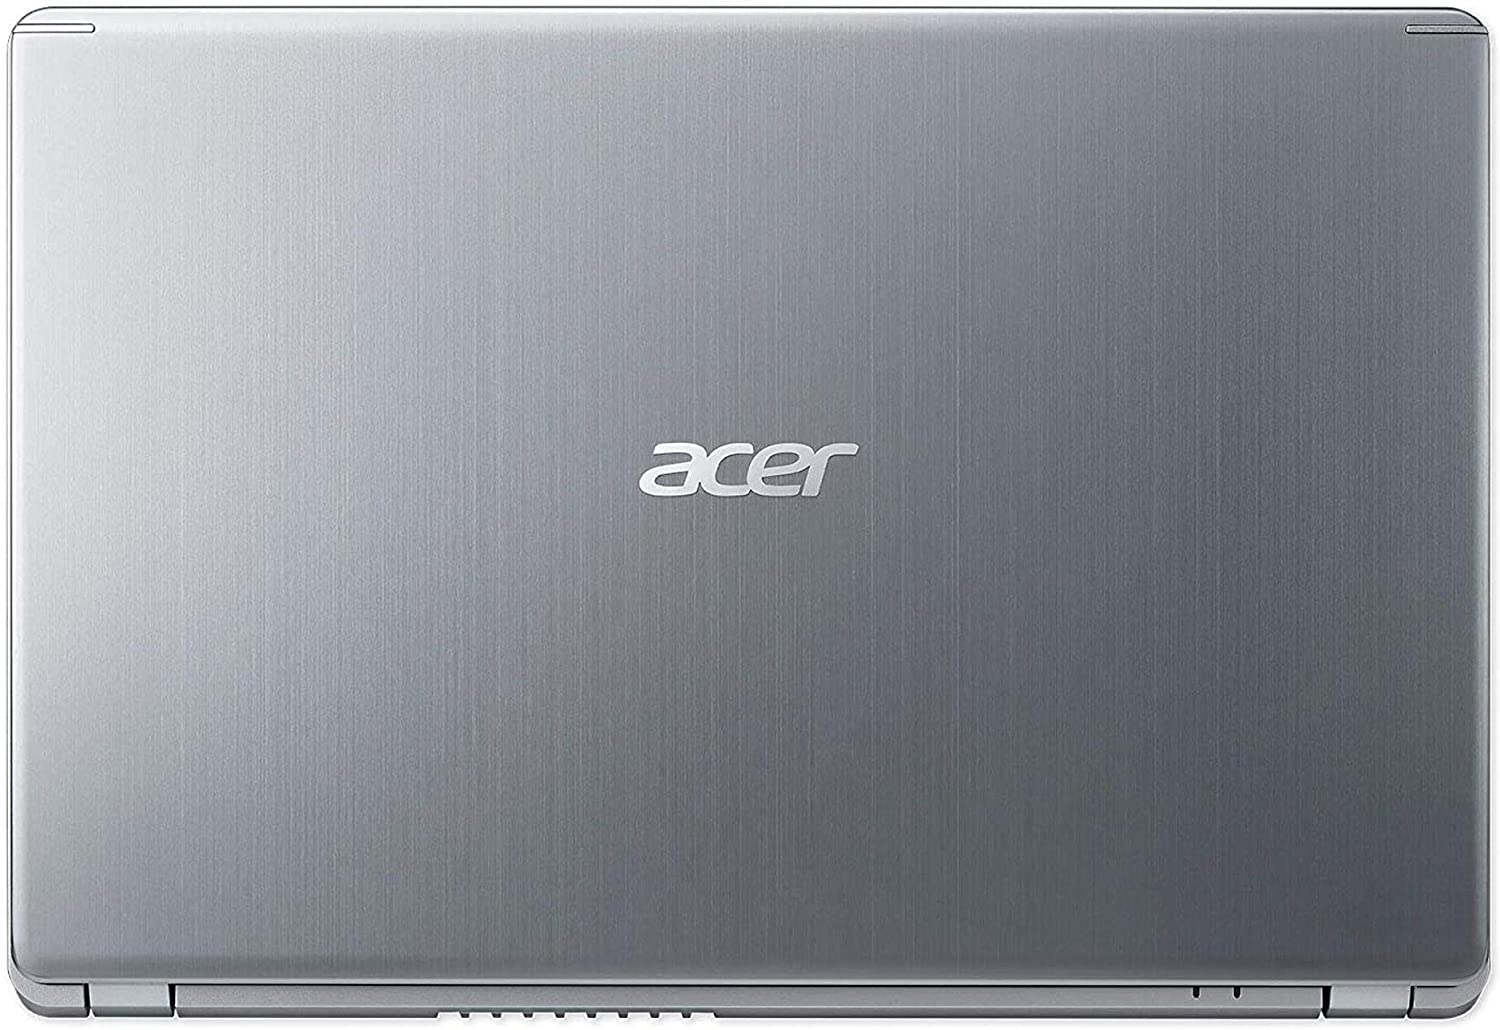 Acer Aspire 5 15.6" FHD Laptop Computer, AMD Ryzen 3 3200U Up to 3.5GHz (Beats i5-7200U), 4GB DDR4 RAM, 128GB PCIe SSD, 802.11ac WiFi, HDMI, Backlit Keyboard, Silver, Windows 10 Home in S Mode - image 6 of 6